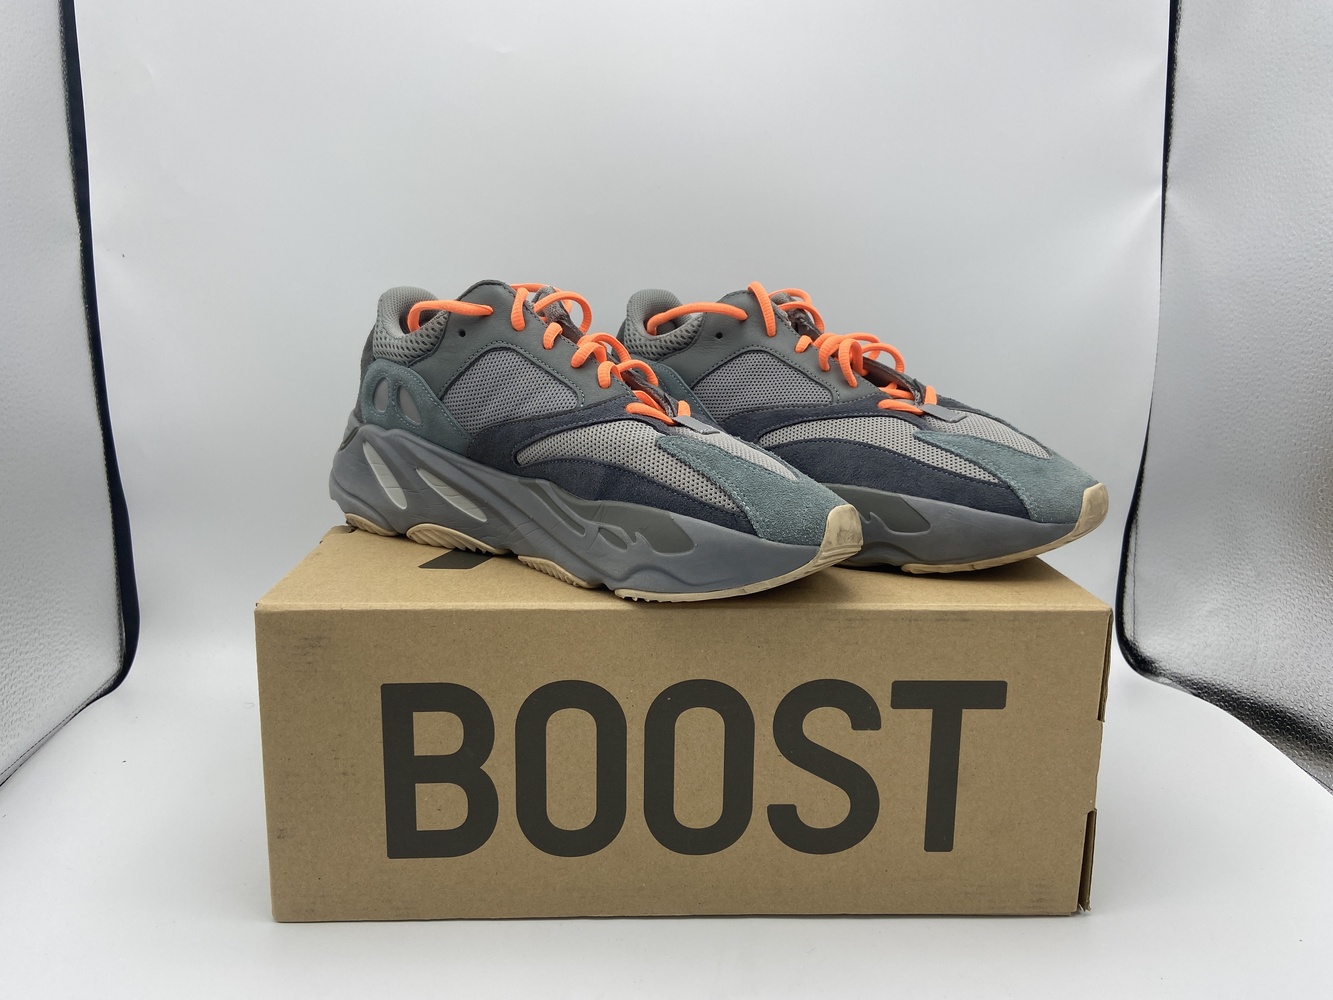 Adidas Yeezy Boost 700 Inertia Size 11.5